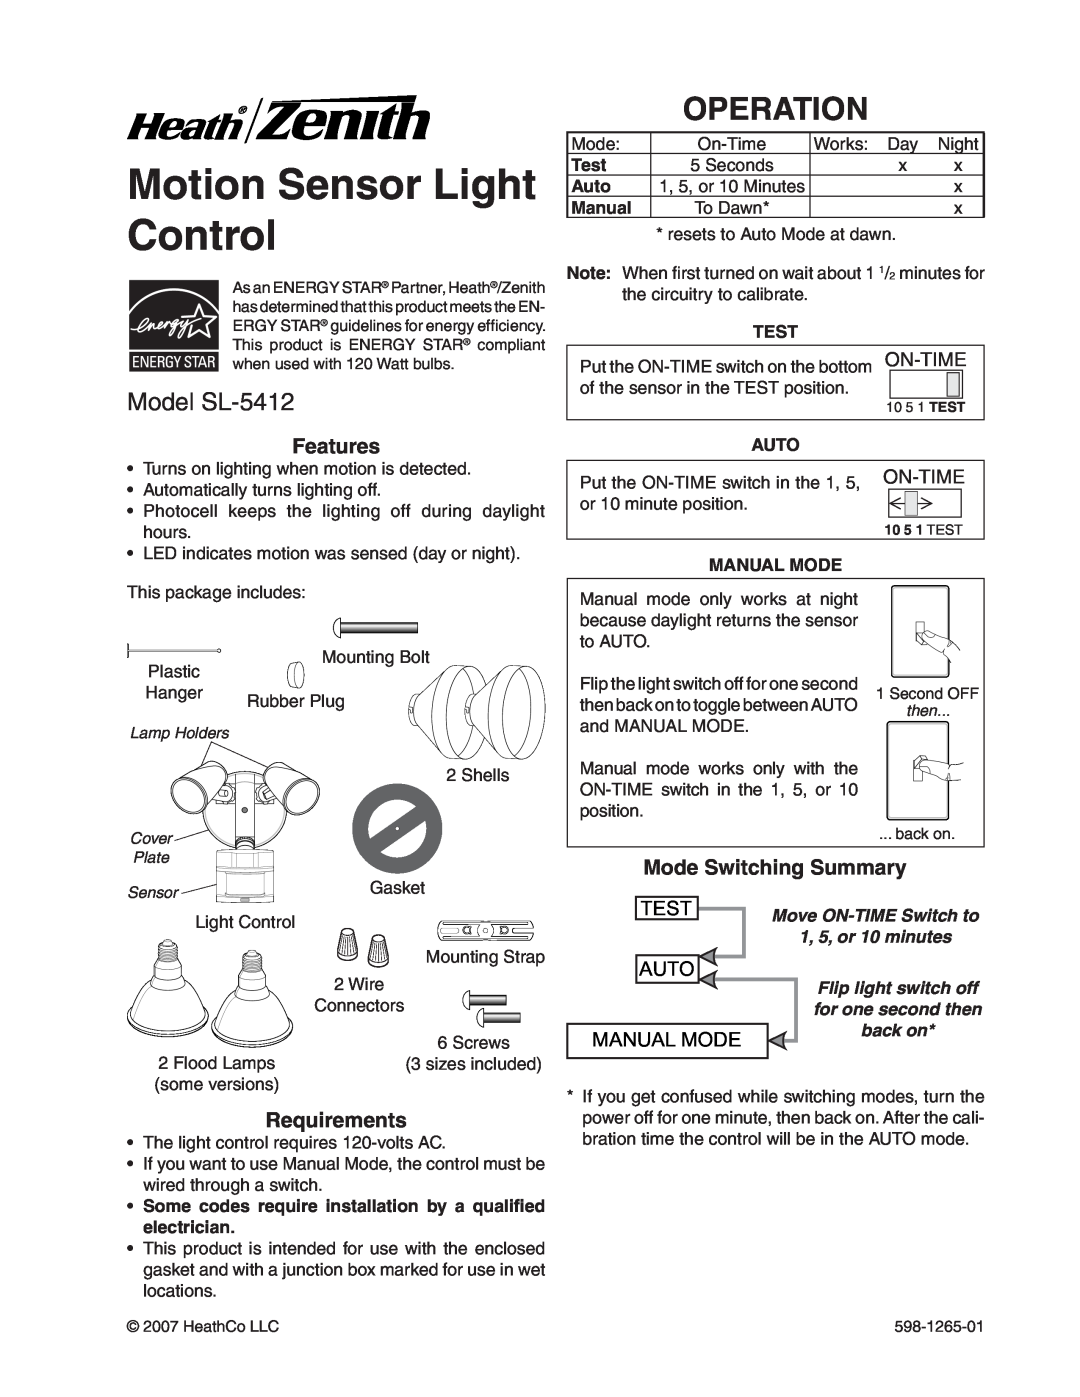 Heath Zenith manual Operation, Model SL-5412, Motion Sensor Light Control, Mode Switching Summary, Test, Auto, Manual 